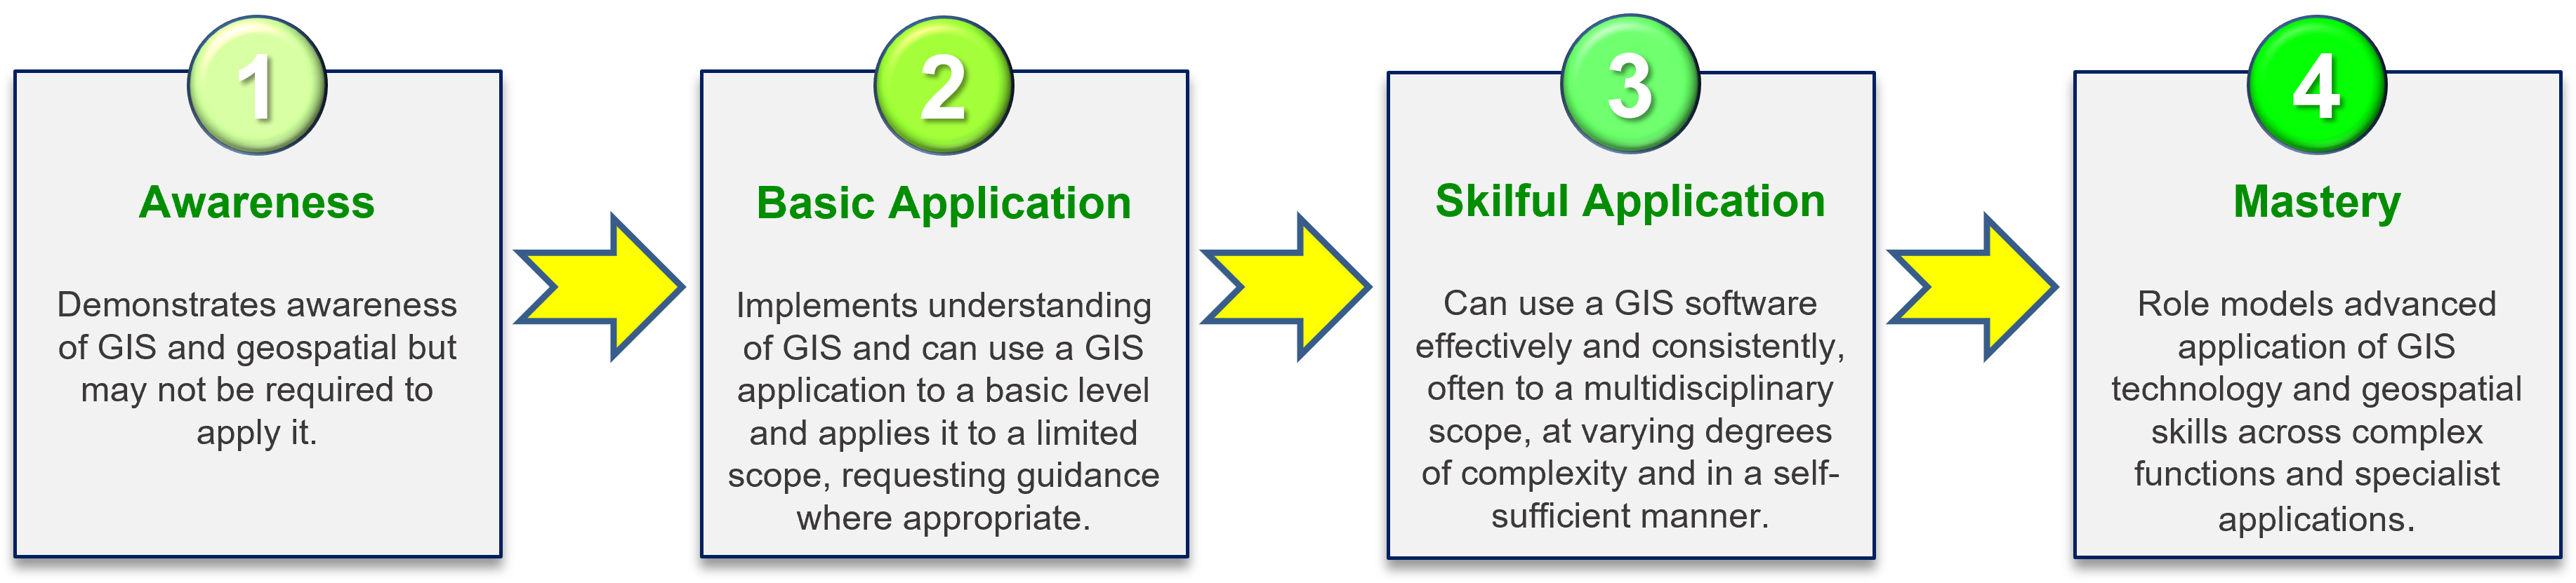 Four levels of GIS247's GIS & Geospatial Skills Framework